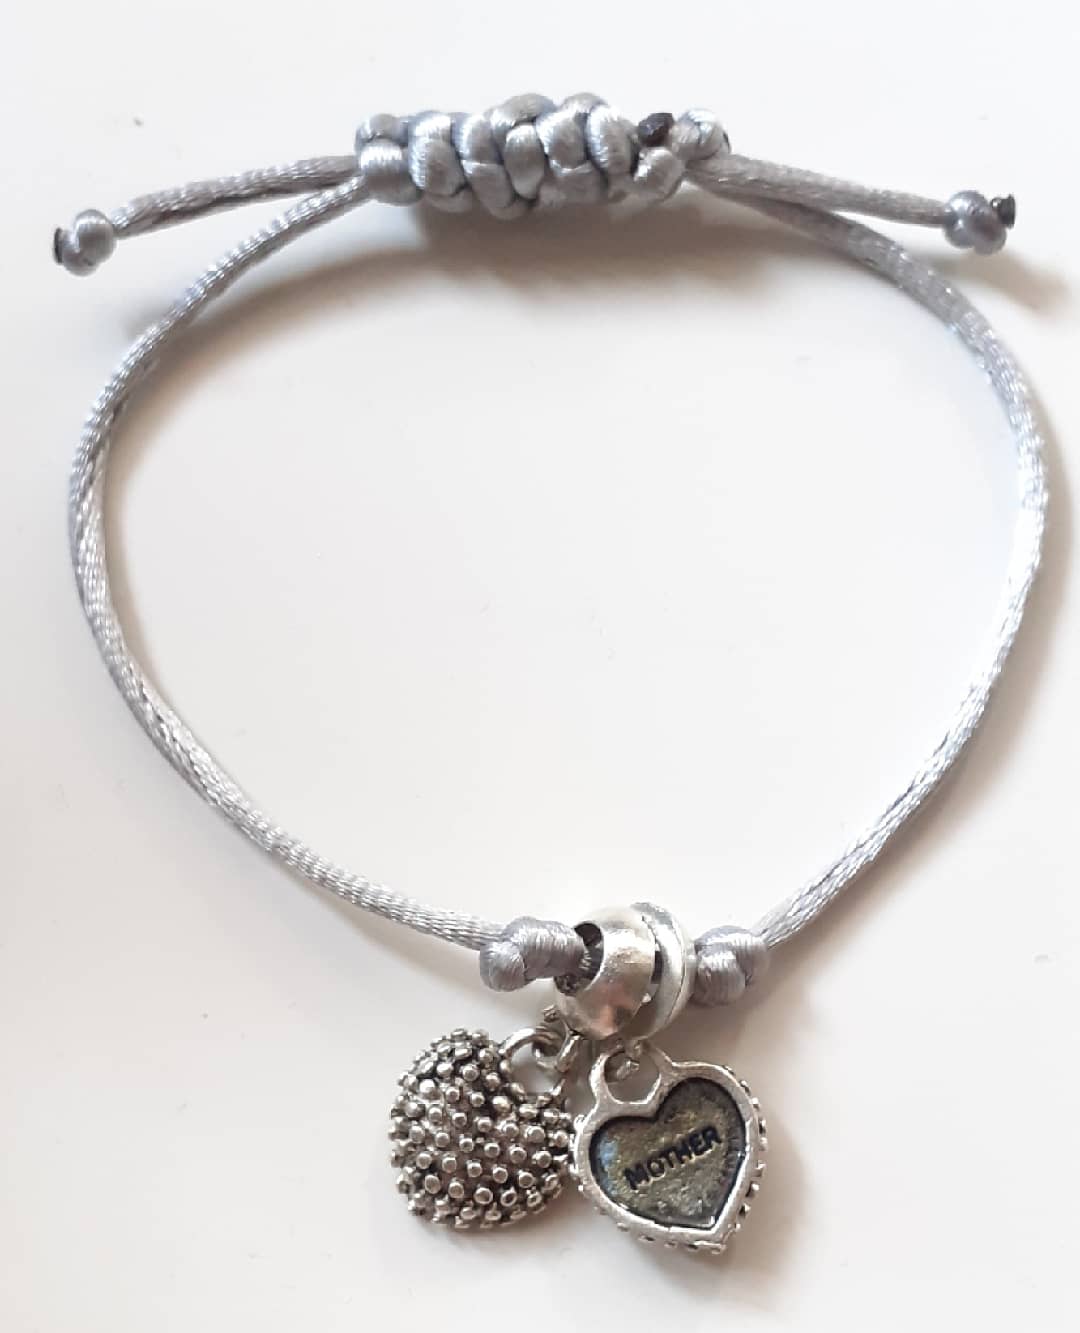 Thread Bracelet, Mother And Son Bracelet, Silver Thread Bracelet, Gift For Mom,gift For Mother, Summer Bracelets, Gifts,heart Mother And Son